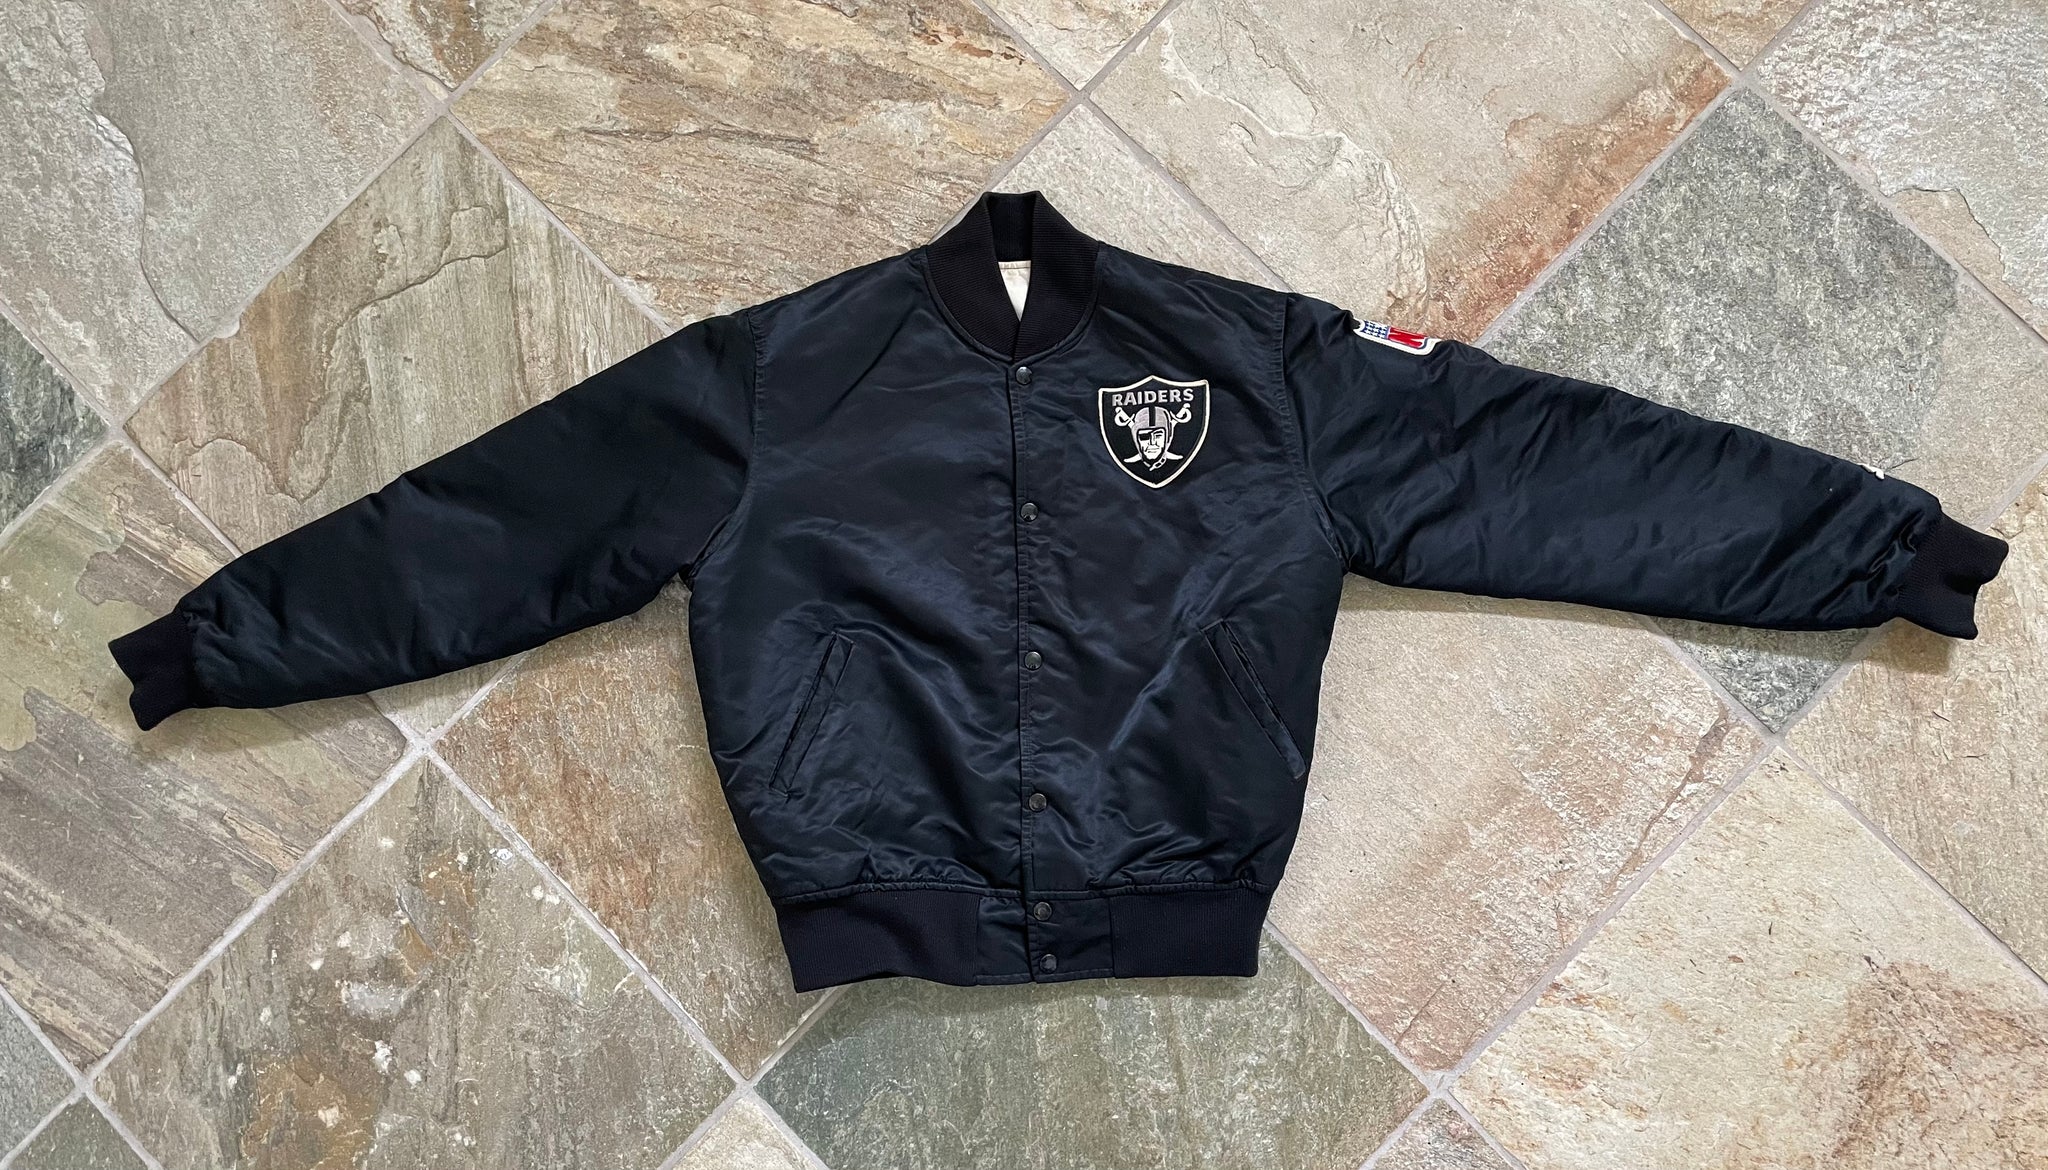 Vintage NFL Raiders 90s Windbreaker Jacket XXL - Cloak Vintage